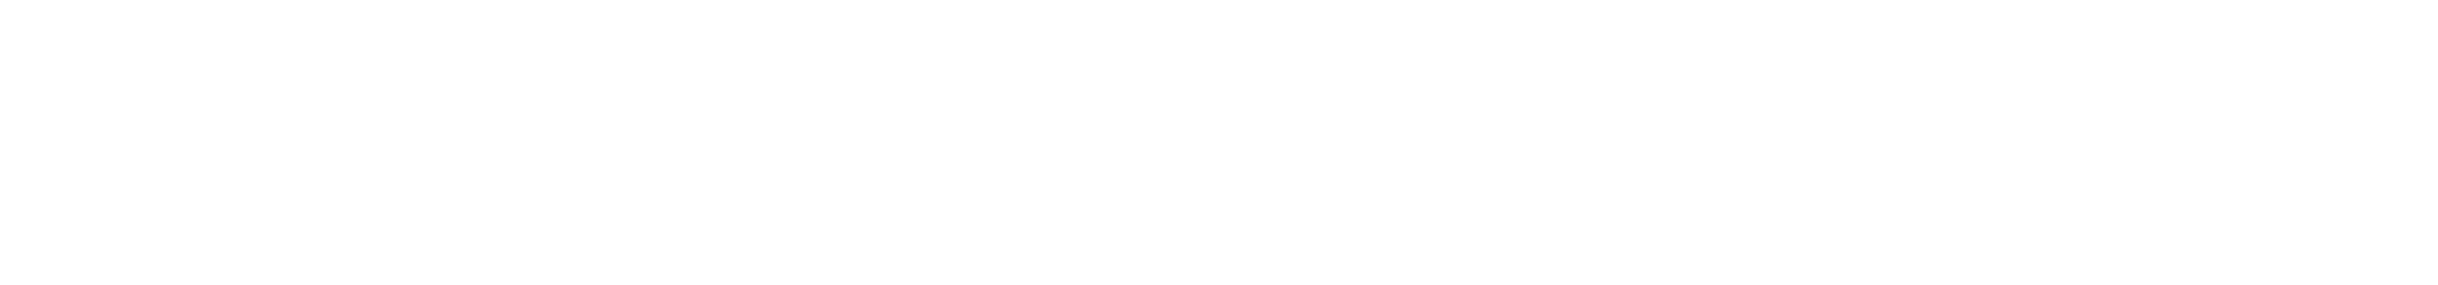 Sweetgrass Botanicals (Rec) logo